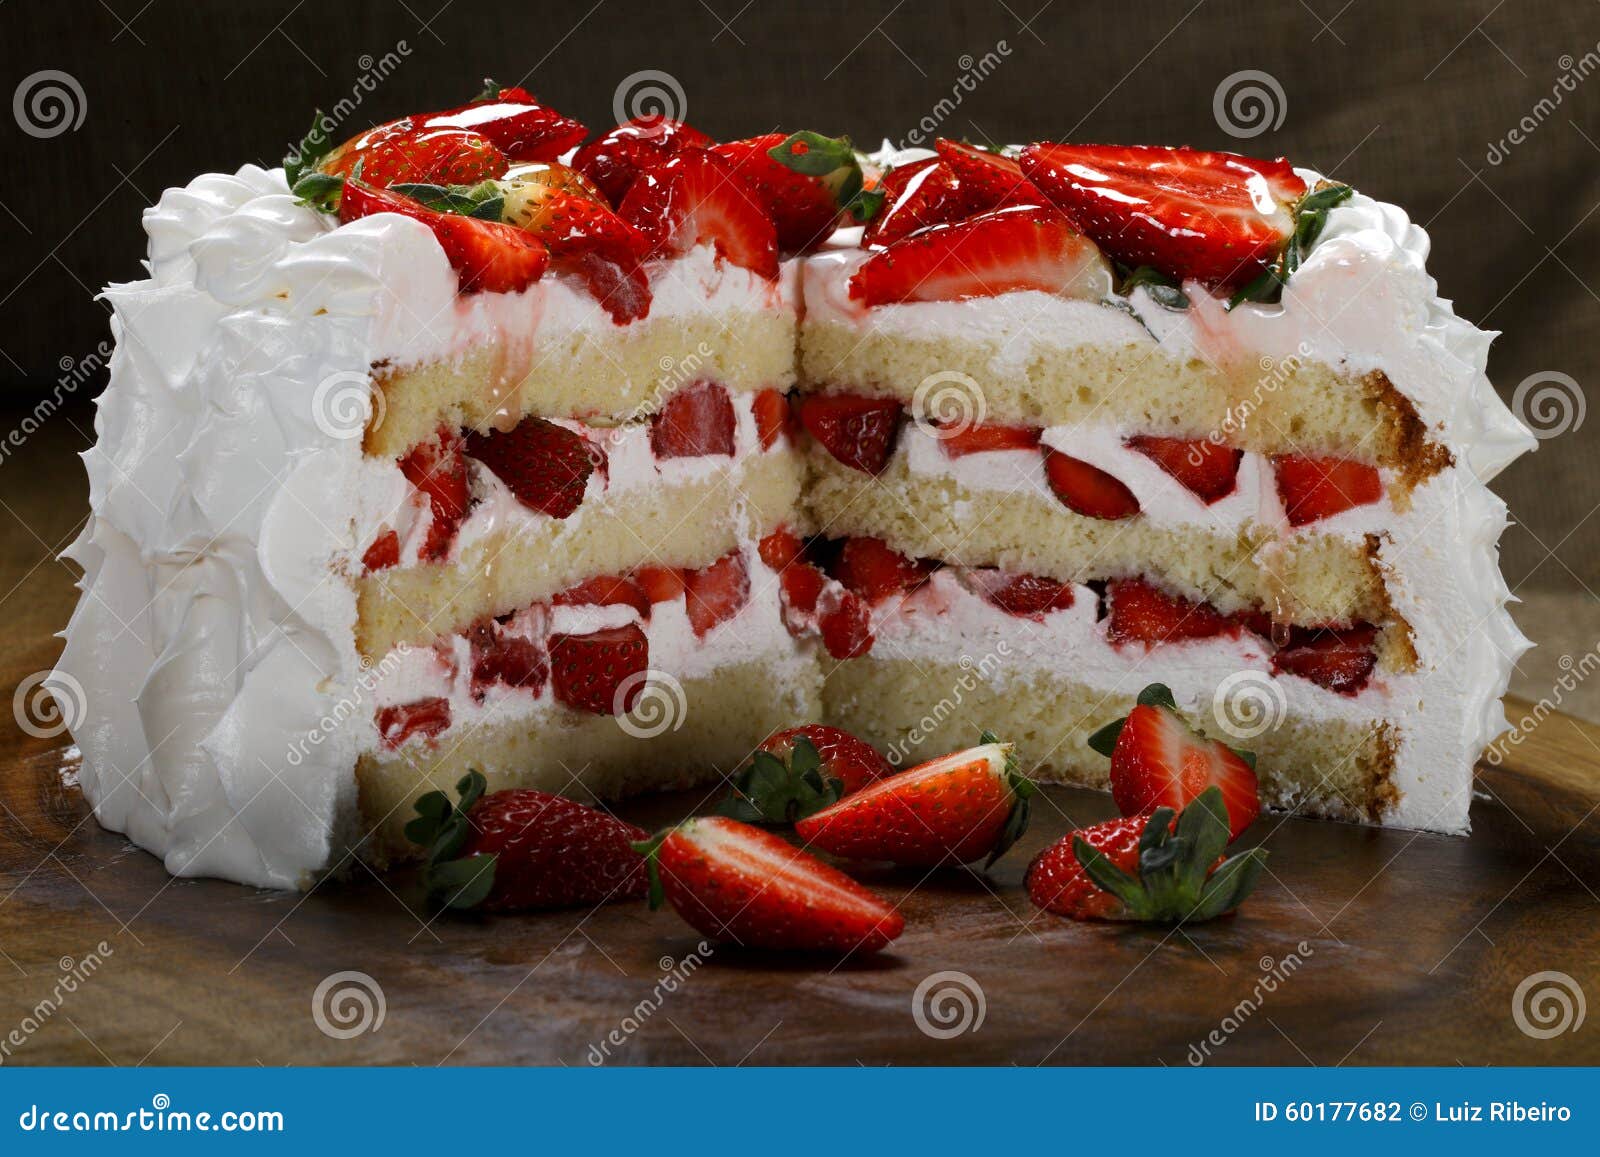 Sliced Strawberry Cake Plastic Wrapped Stock Photo 394389691